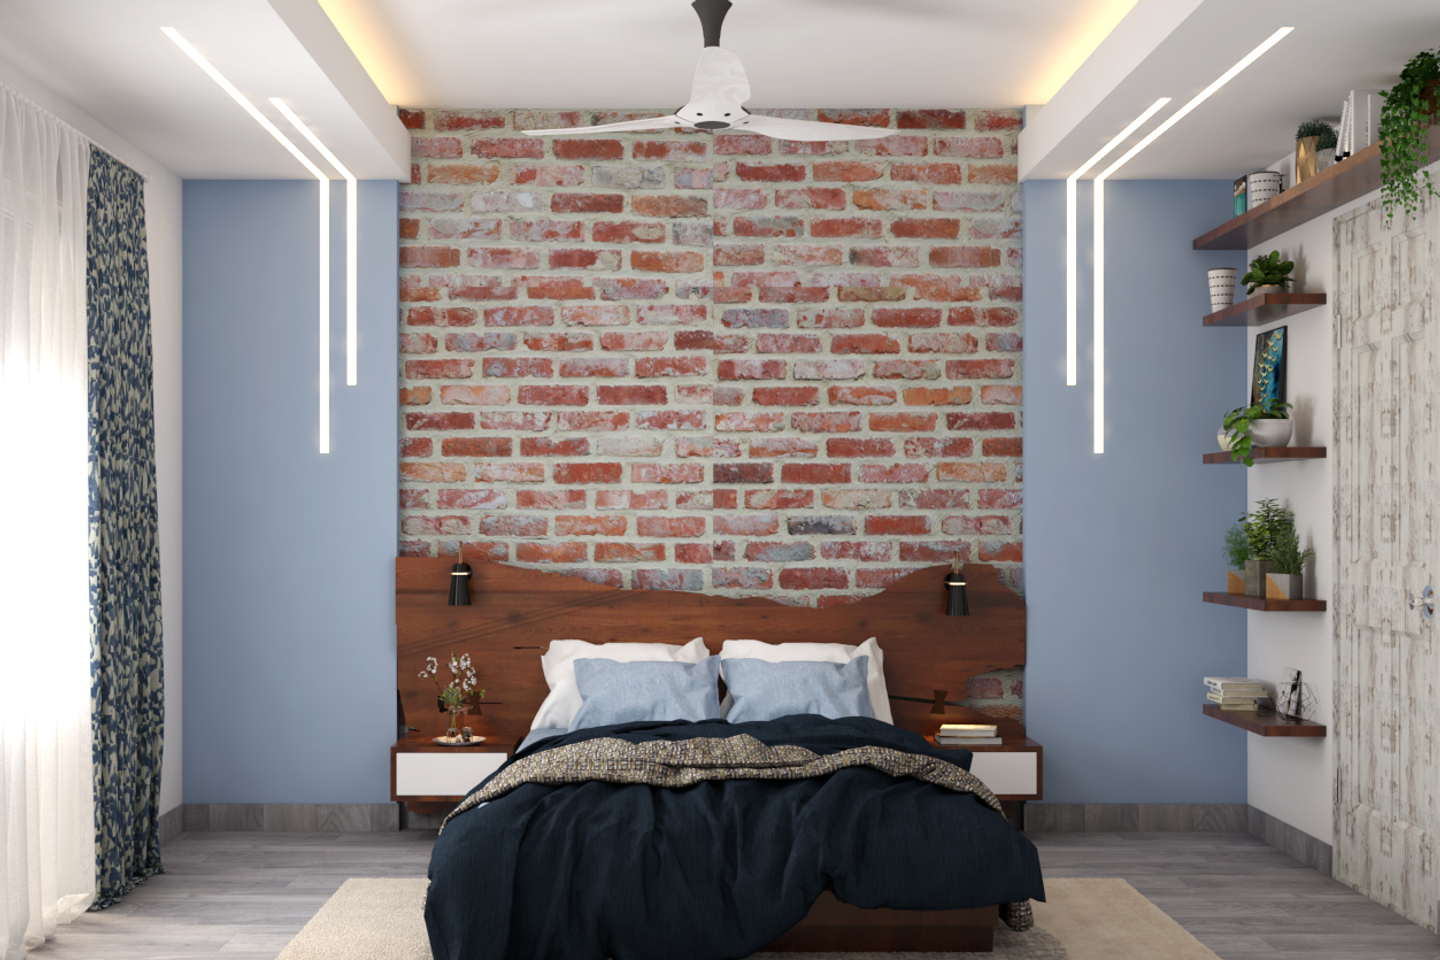 Kid's Bedroom With Brick Wall - Livspace